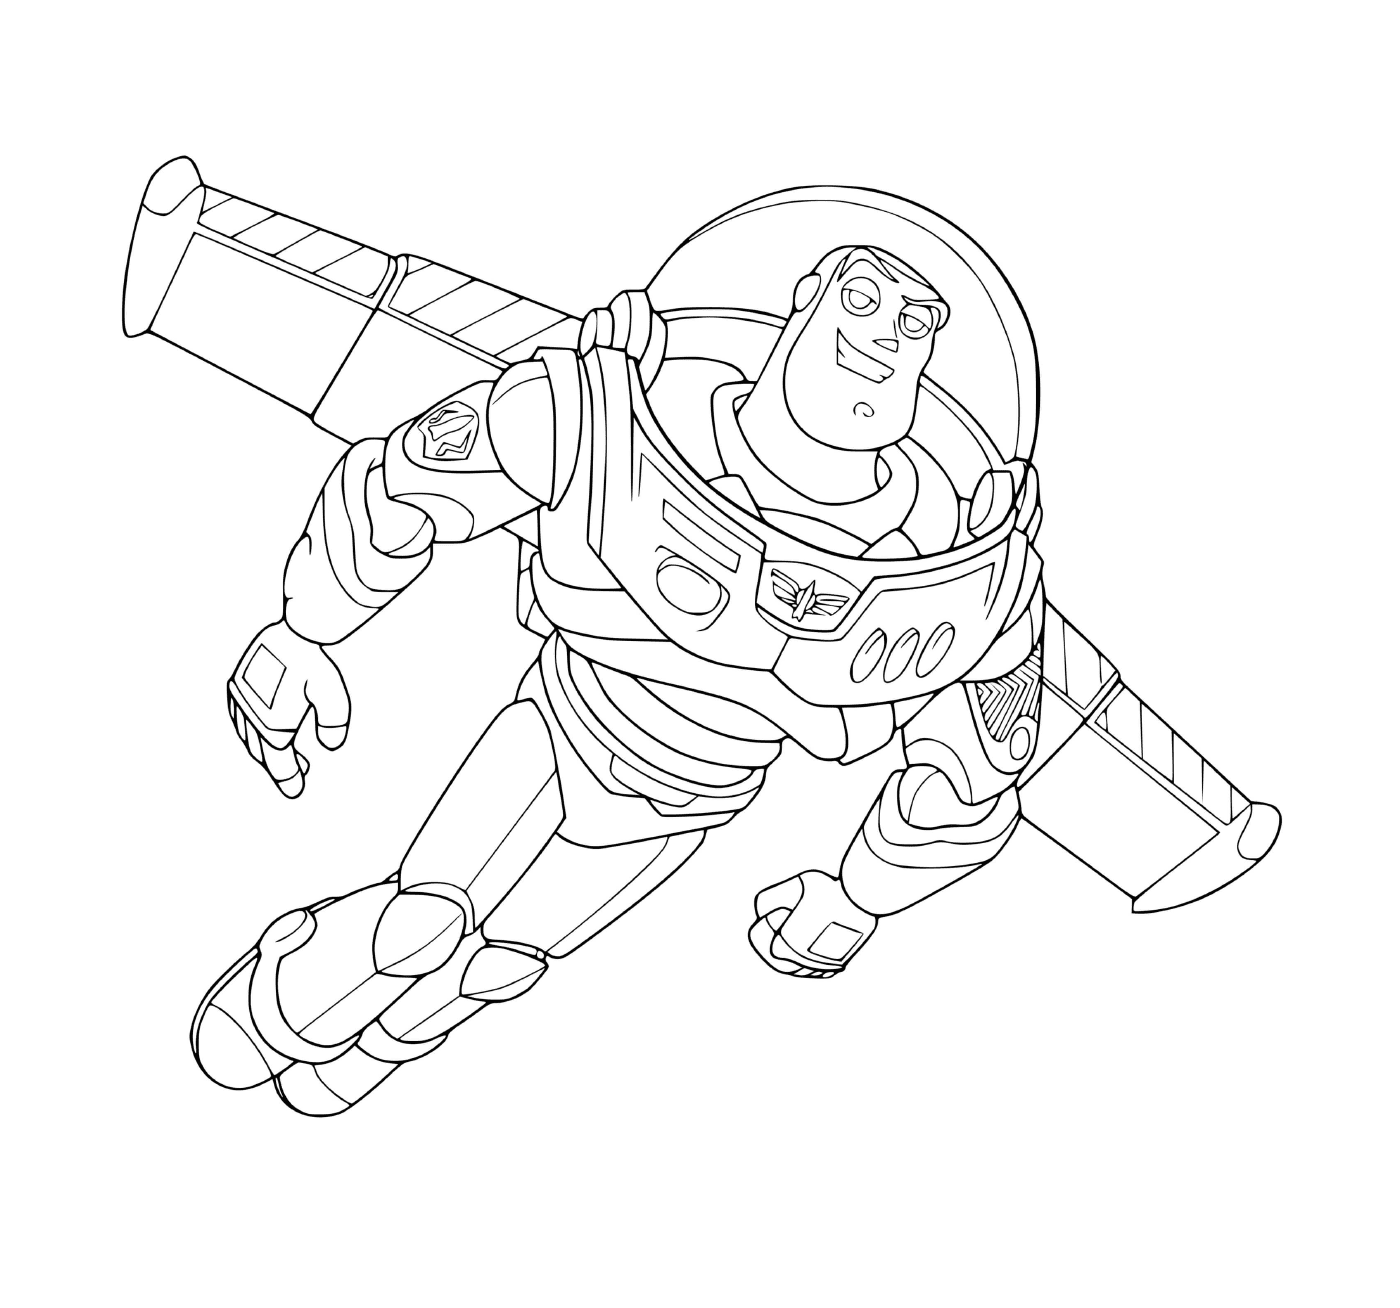   Buzz Lightyear, inspiré de l'astronaute Buzz Aldrin 